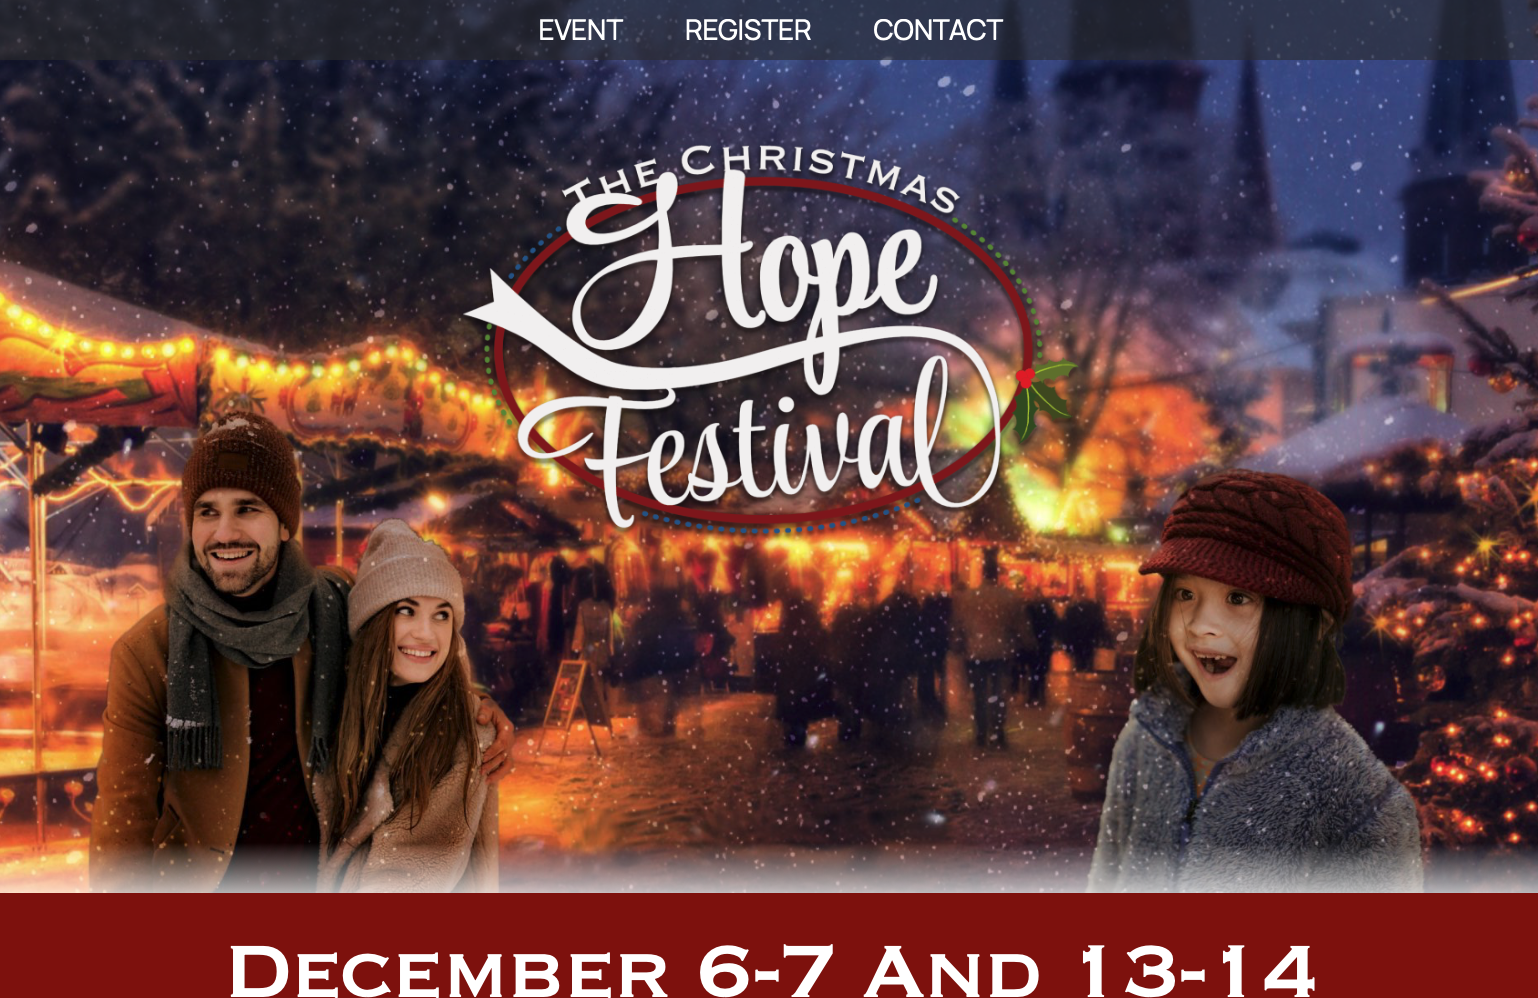 The Christmas Hope Festival